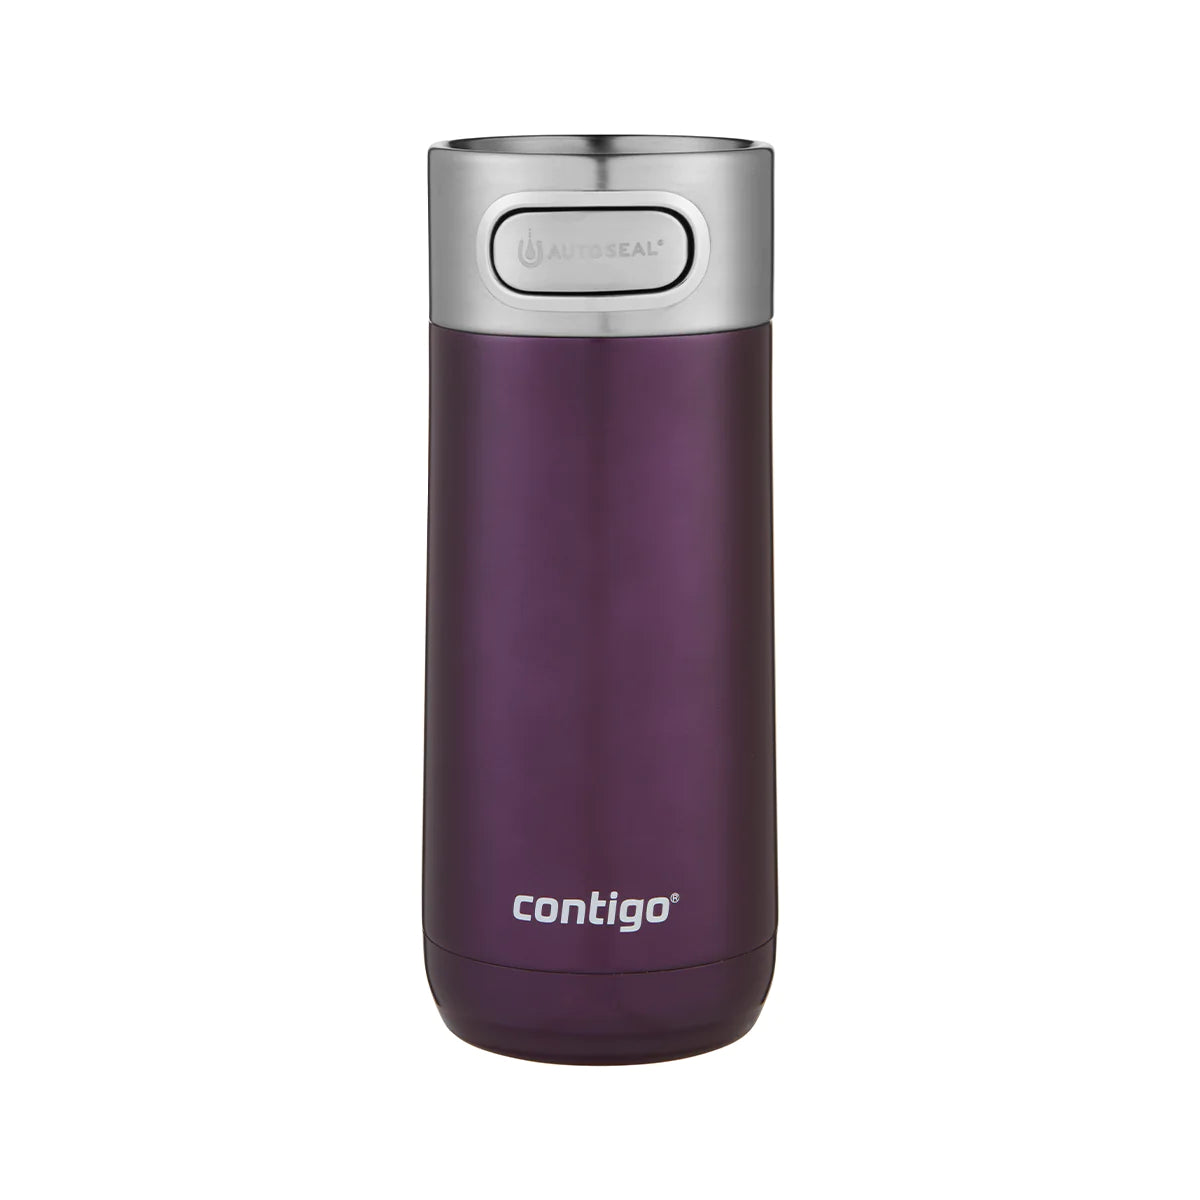 Contigo Autoseal Luxe Vacuum Insulated Stainless Steel Travel Mug 360 ml